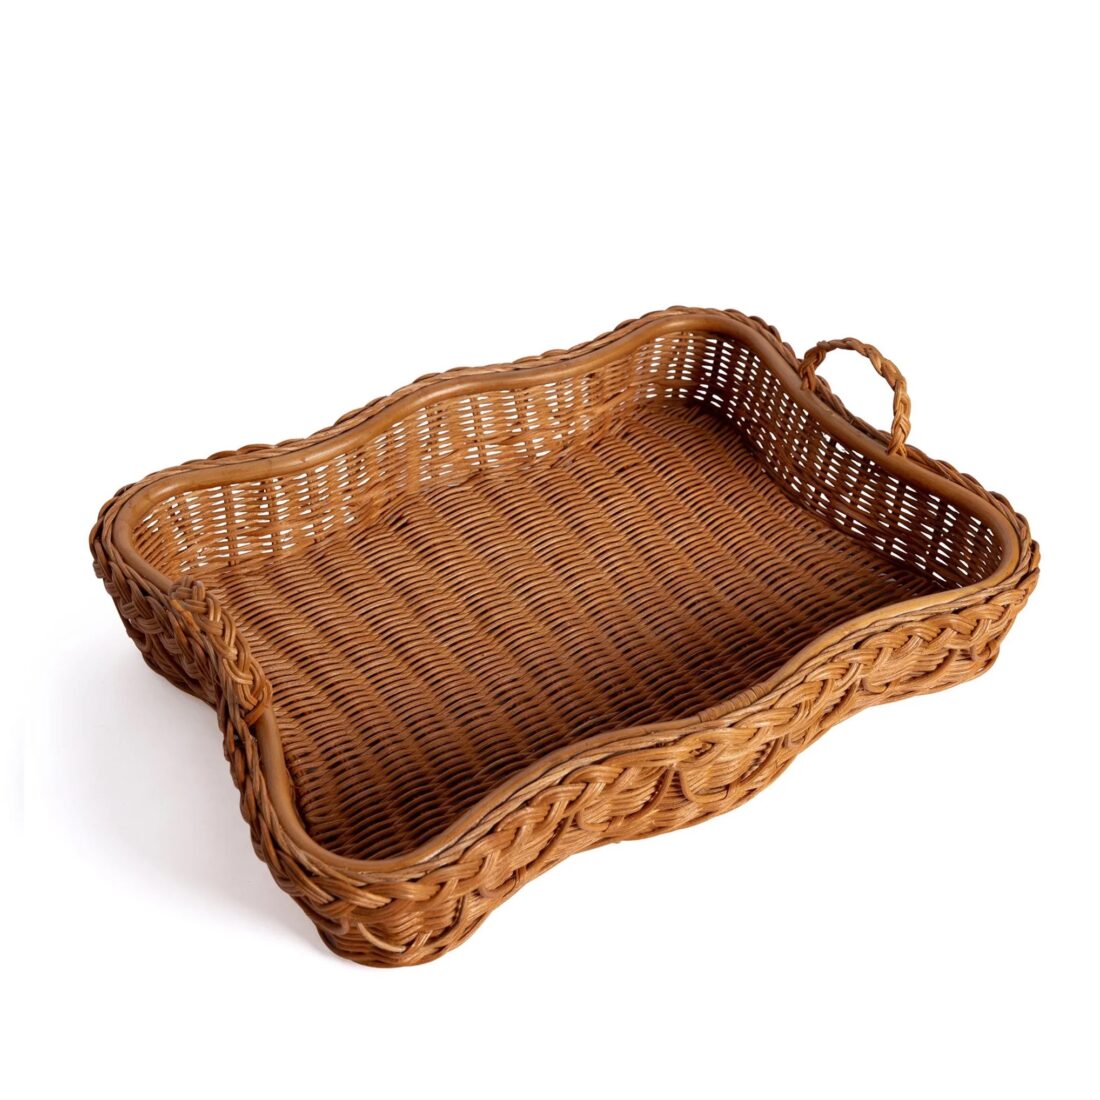 A rattan tray